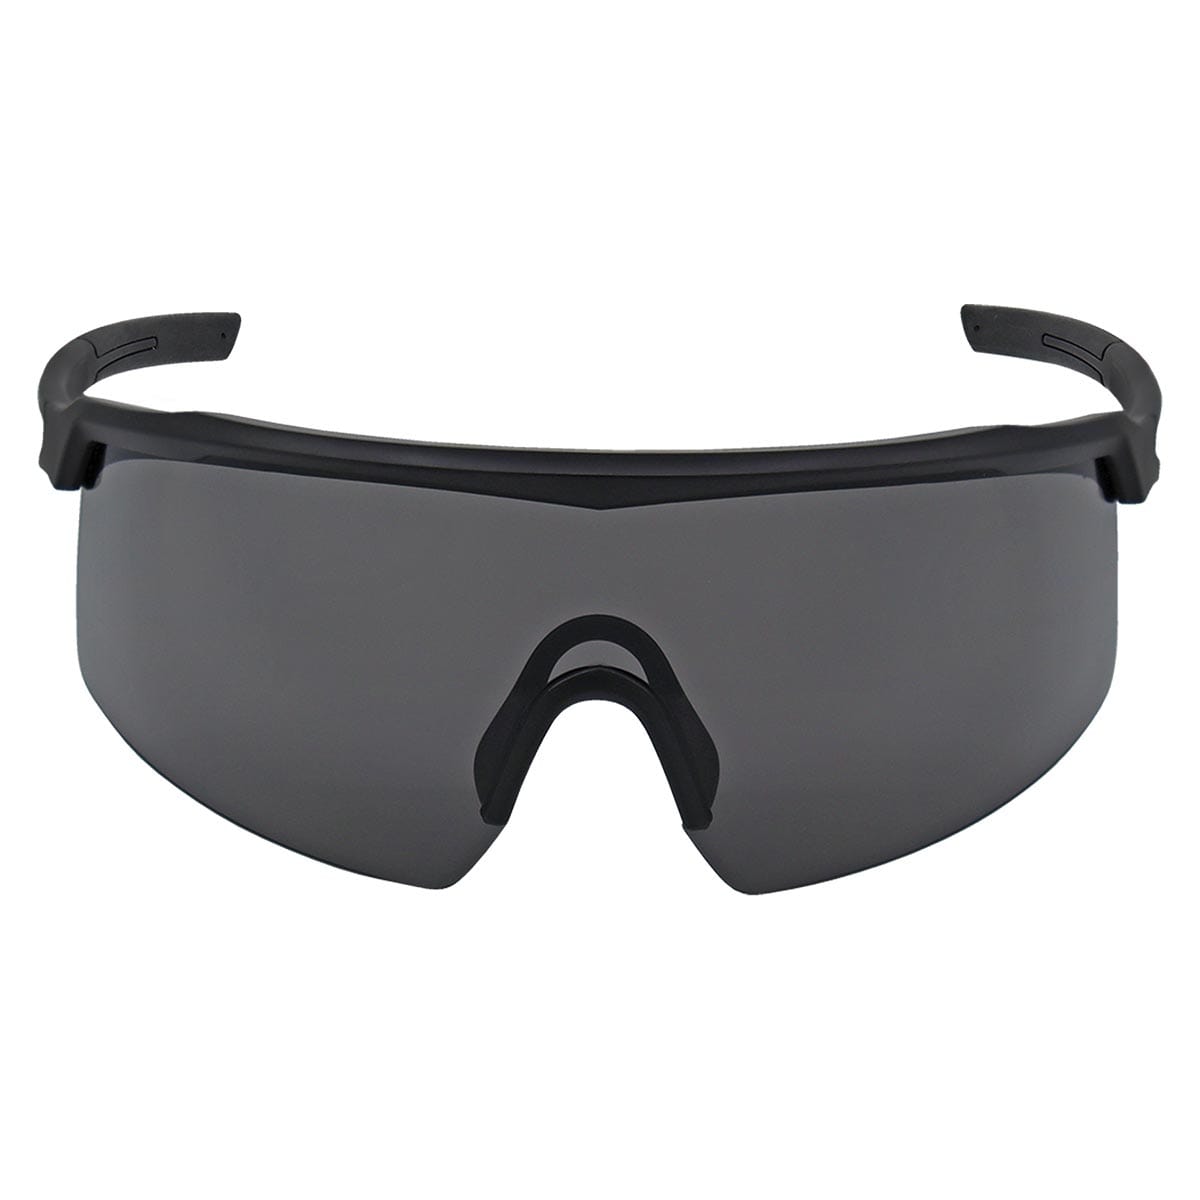 Whipray Anti-Fog Safety Glasses